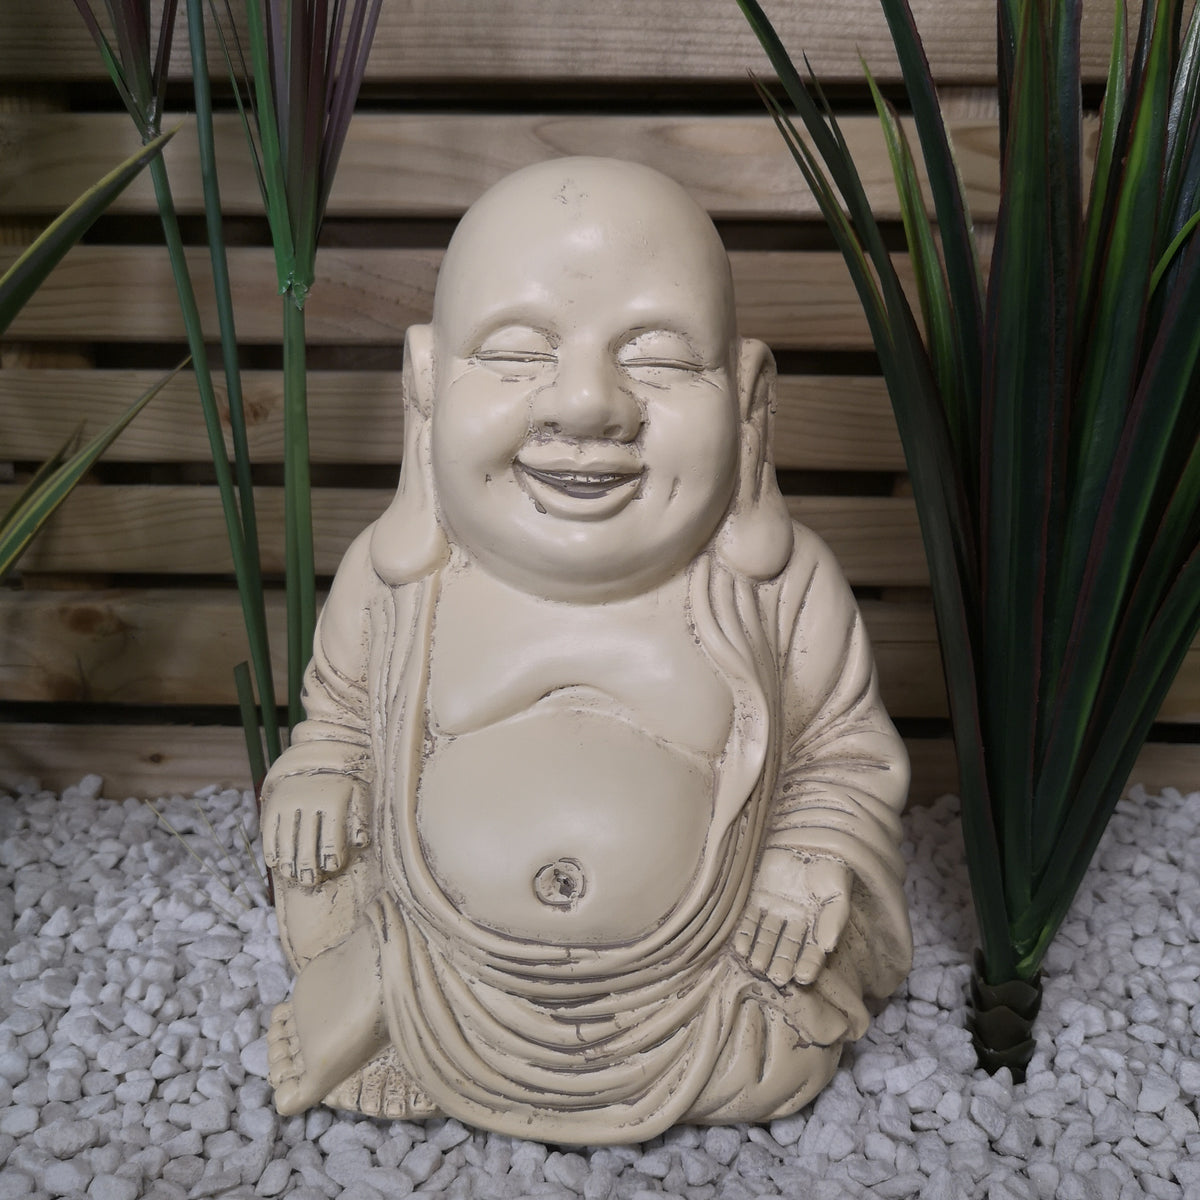 30cm Laughing Buddha Sculpture Garden Patio Decoration